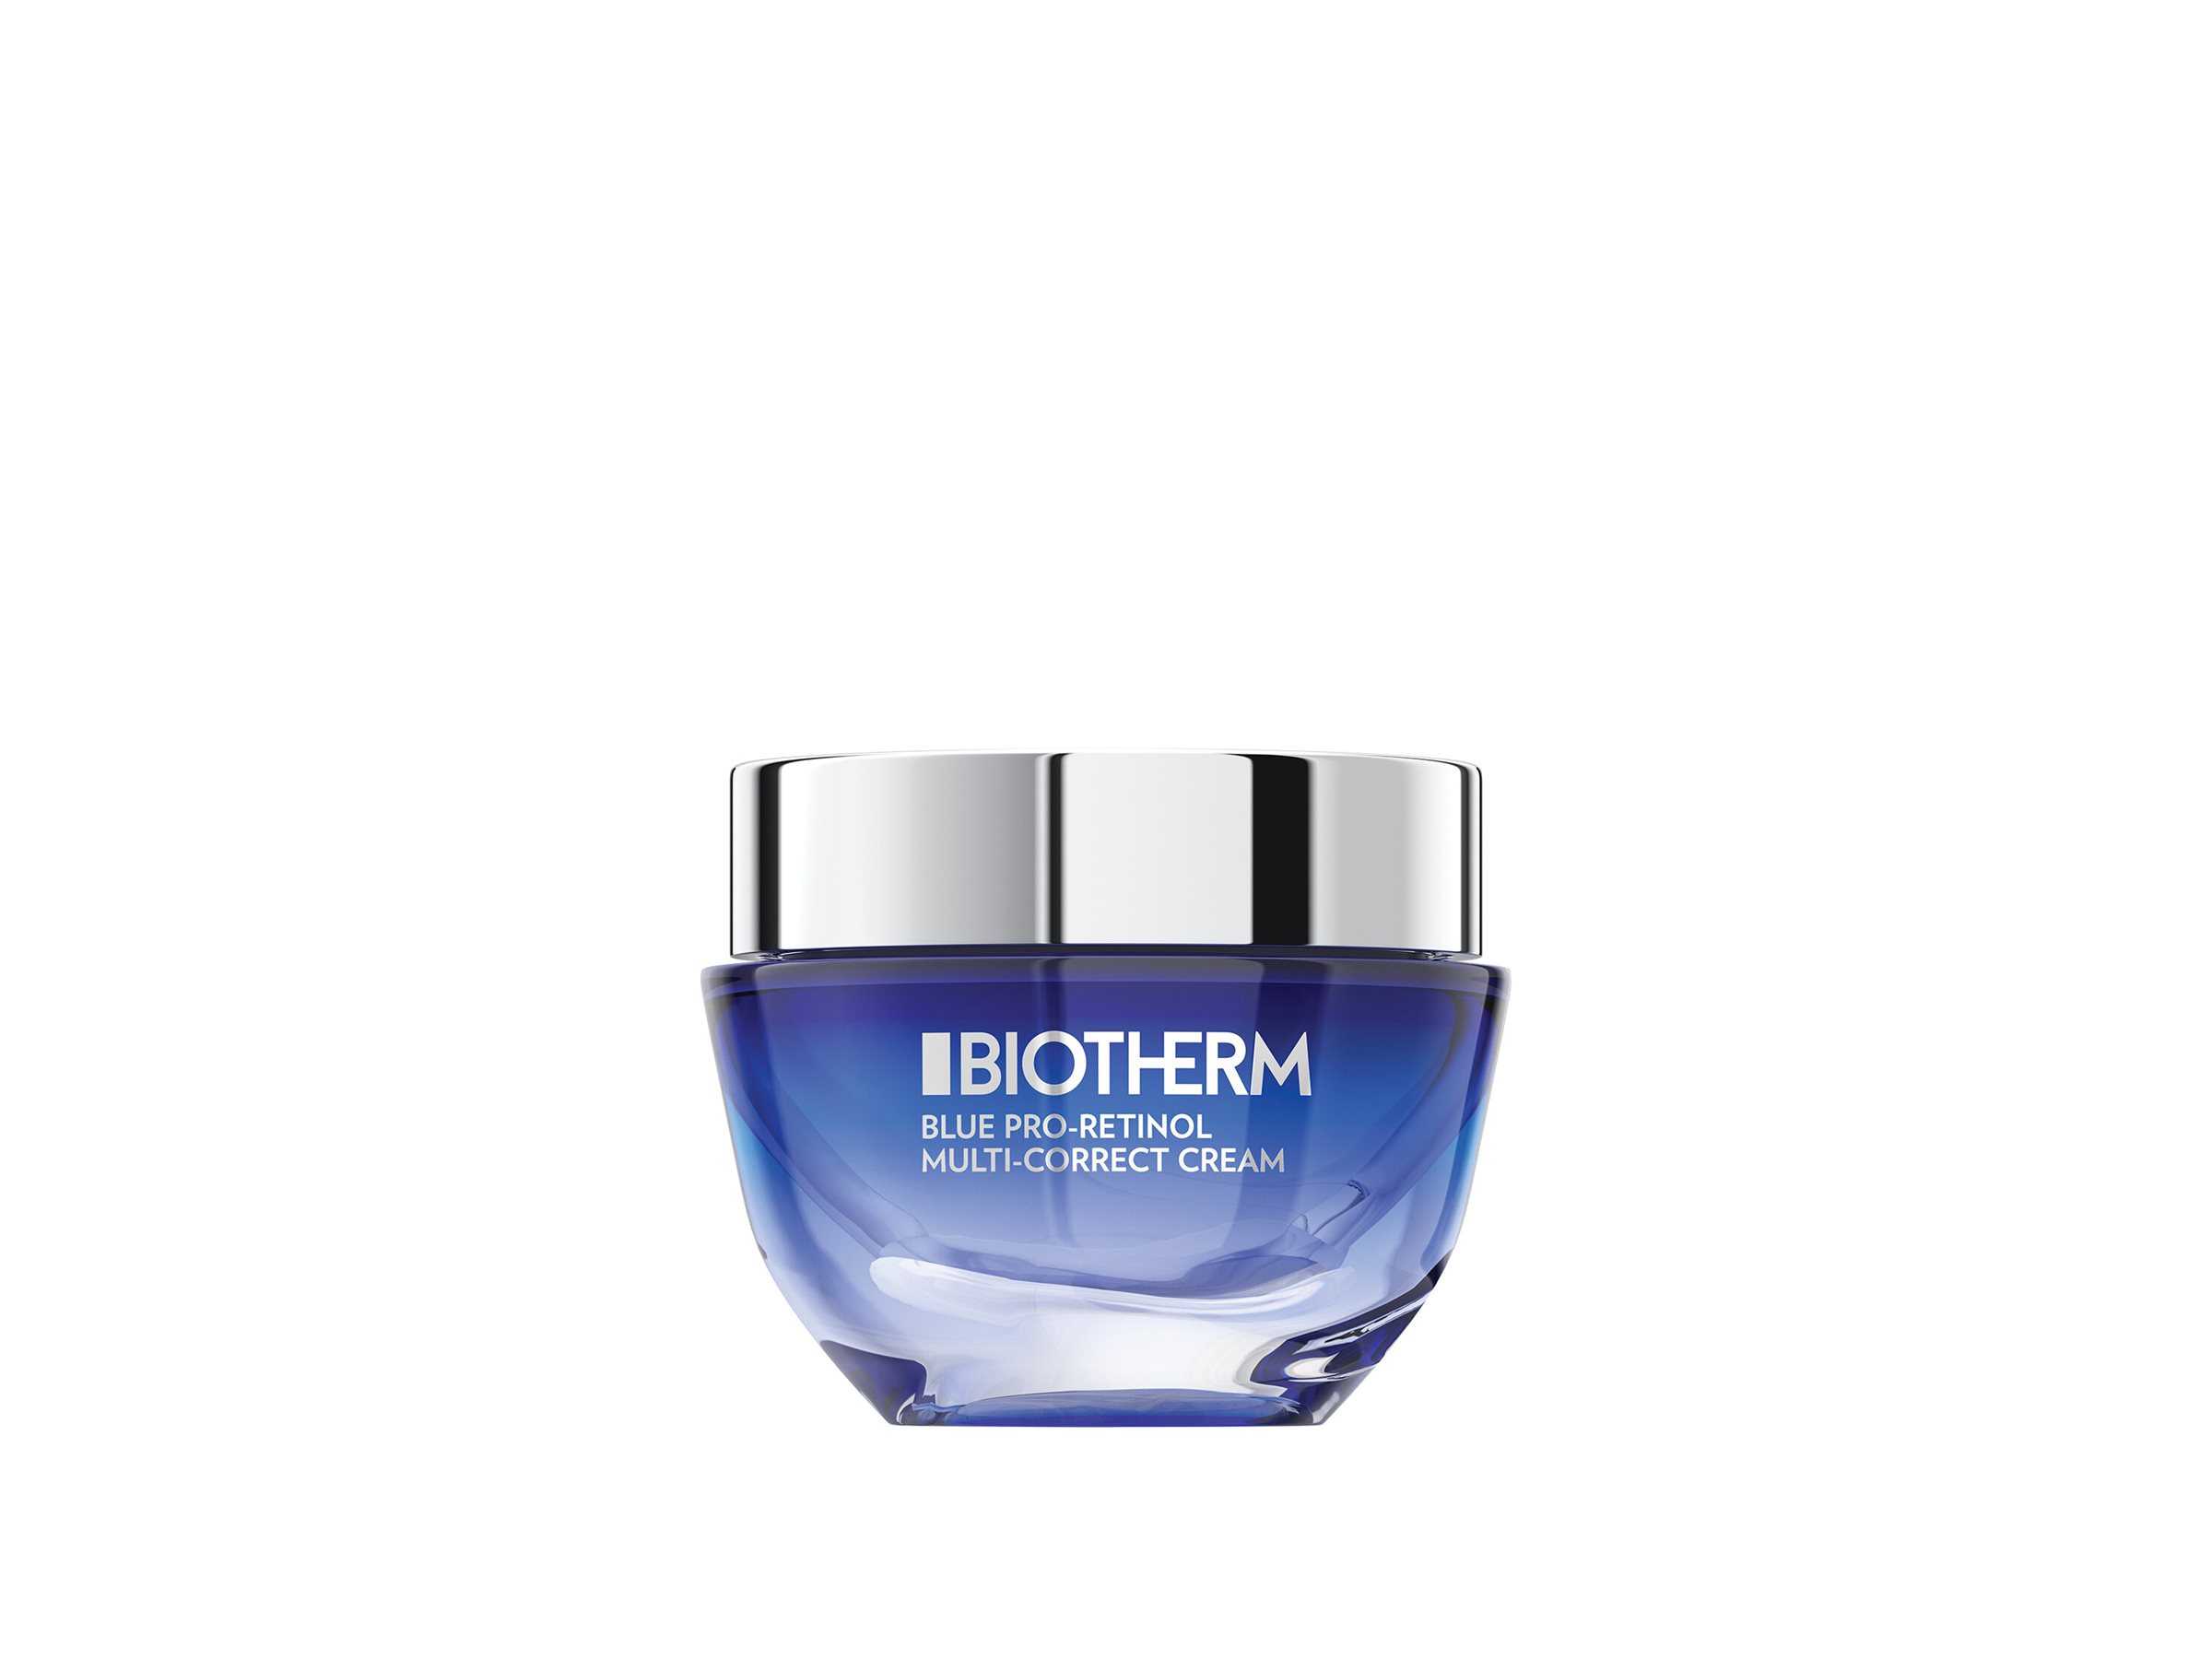 Biotherm Blue Pro-Retinol Multi-correct Cream - 50ml